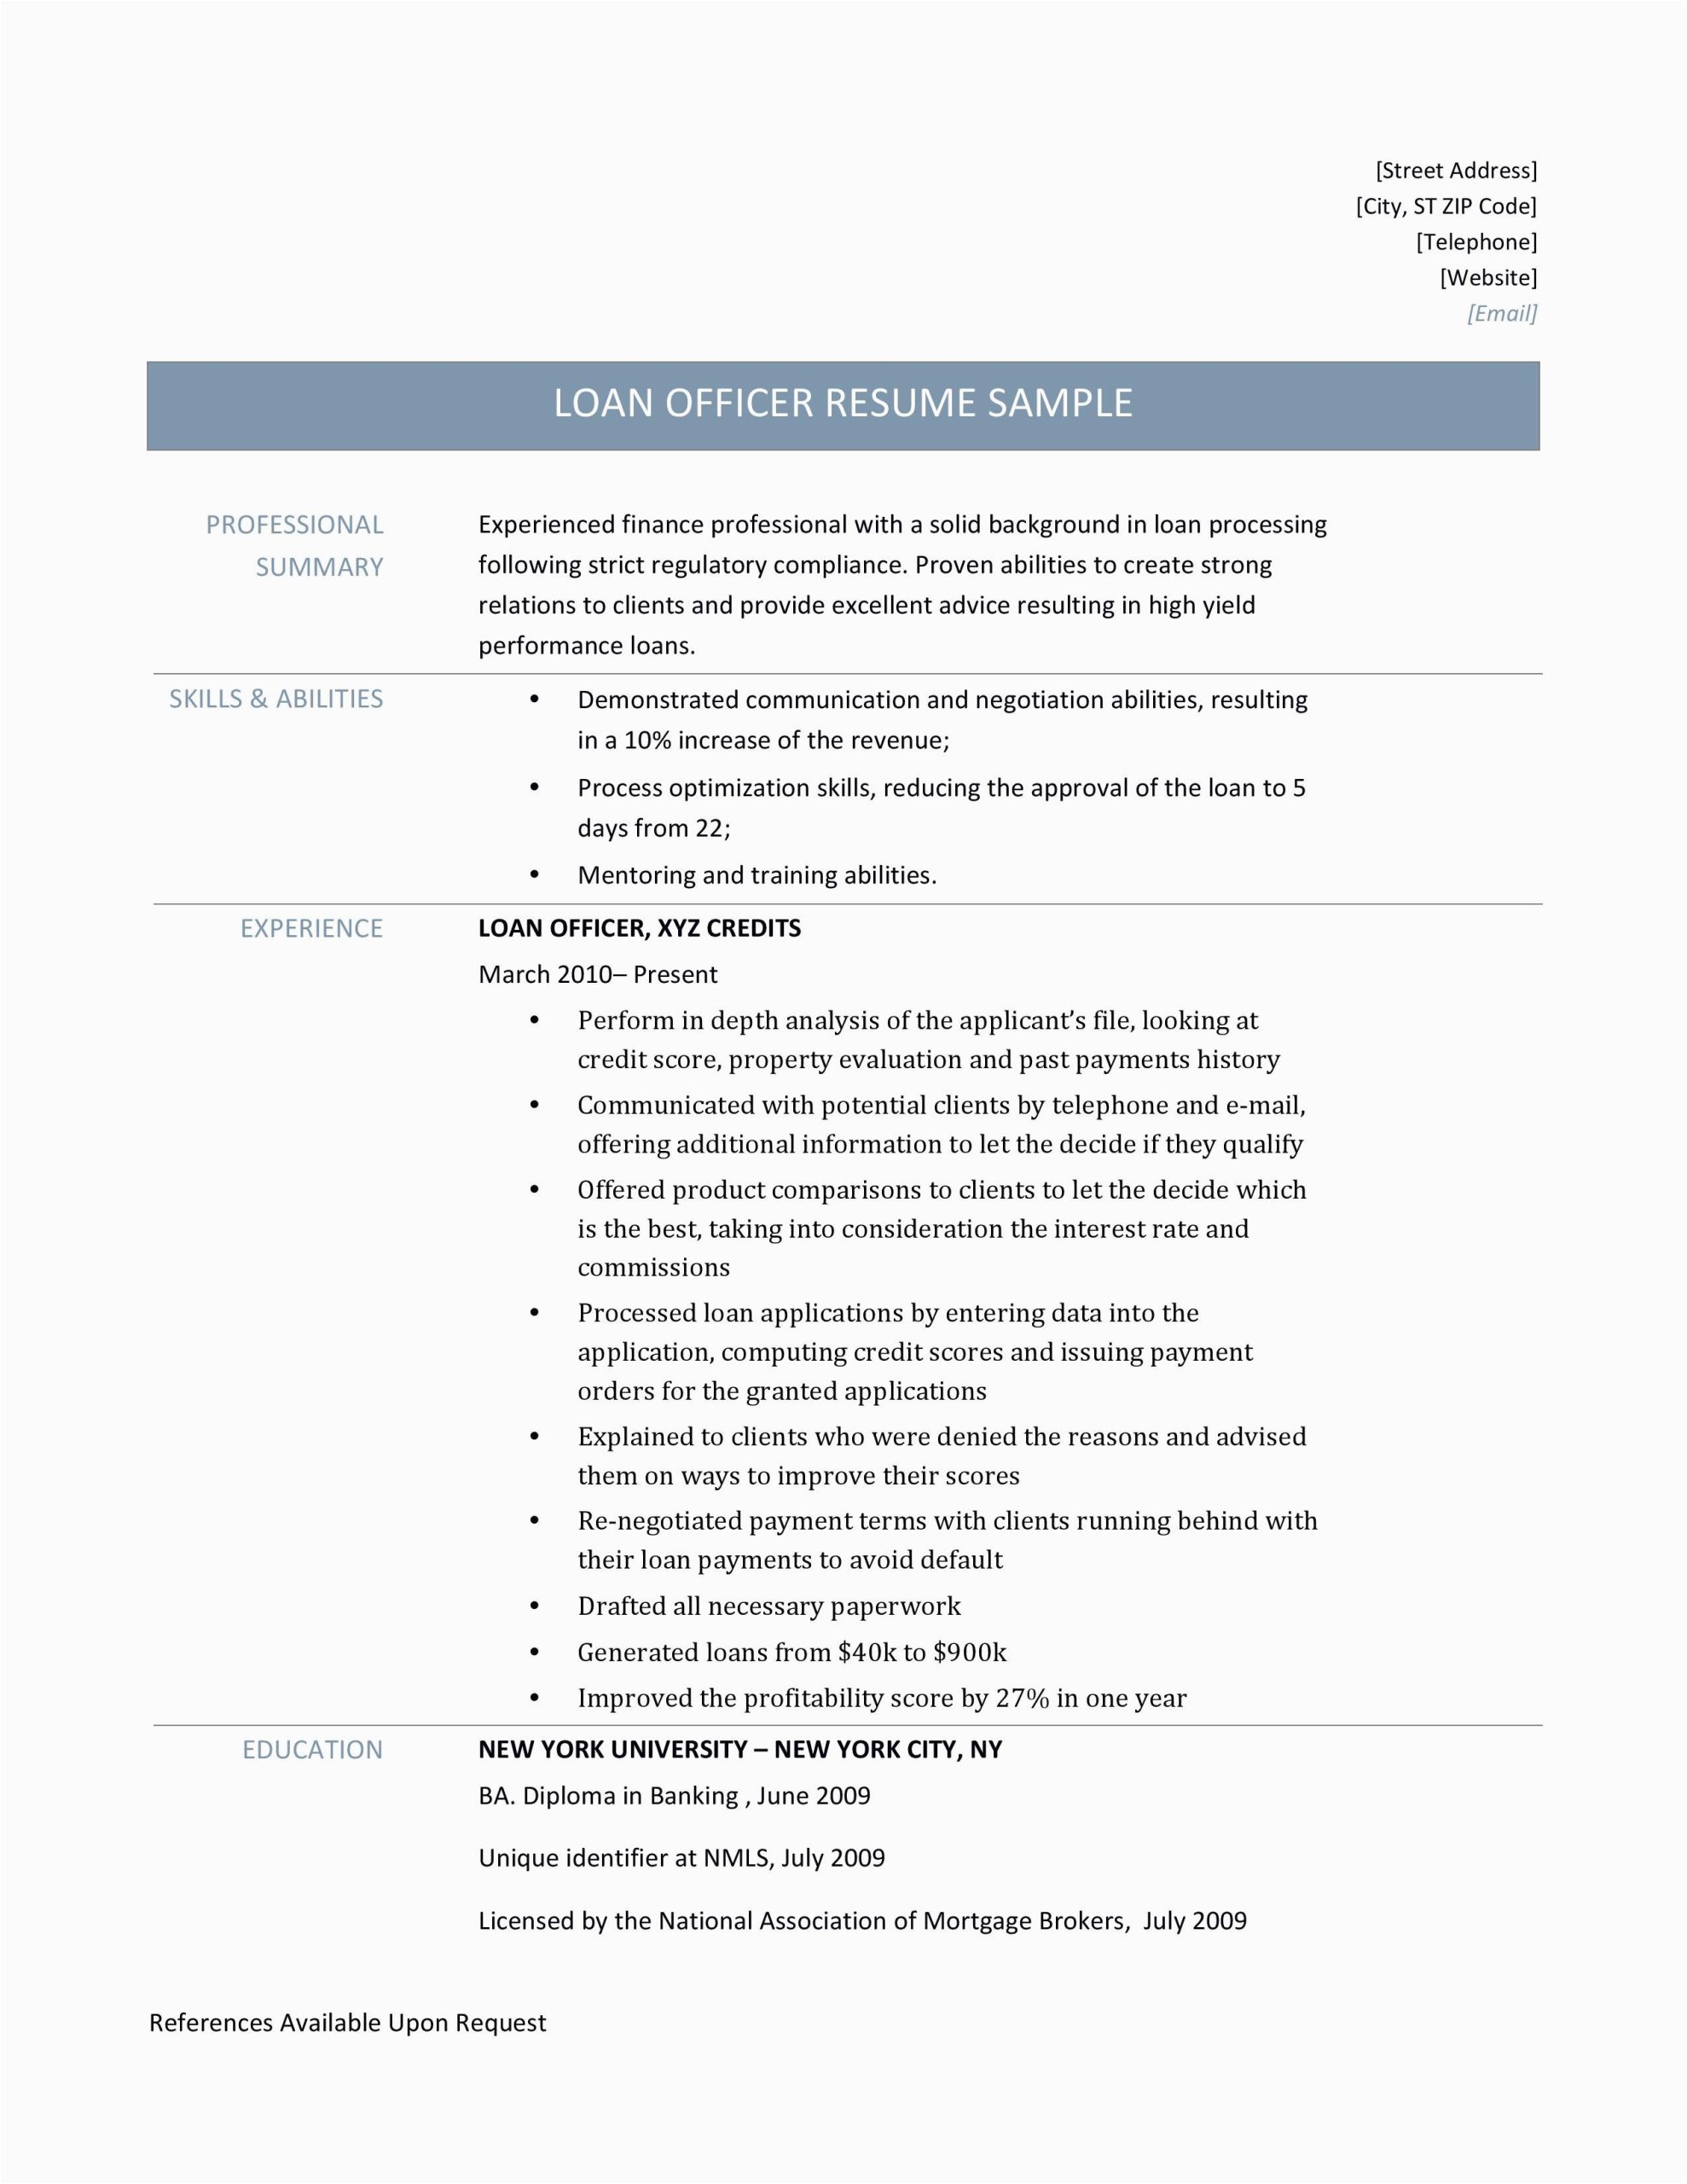 Sample Resume for A Mortgage Loan Officer Loan Ficer Resume Sample and Job Description Line Resume Builders